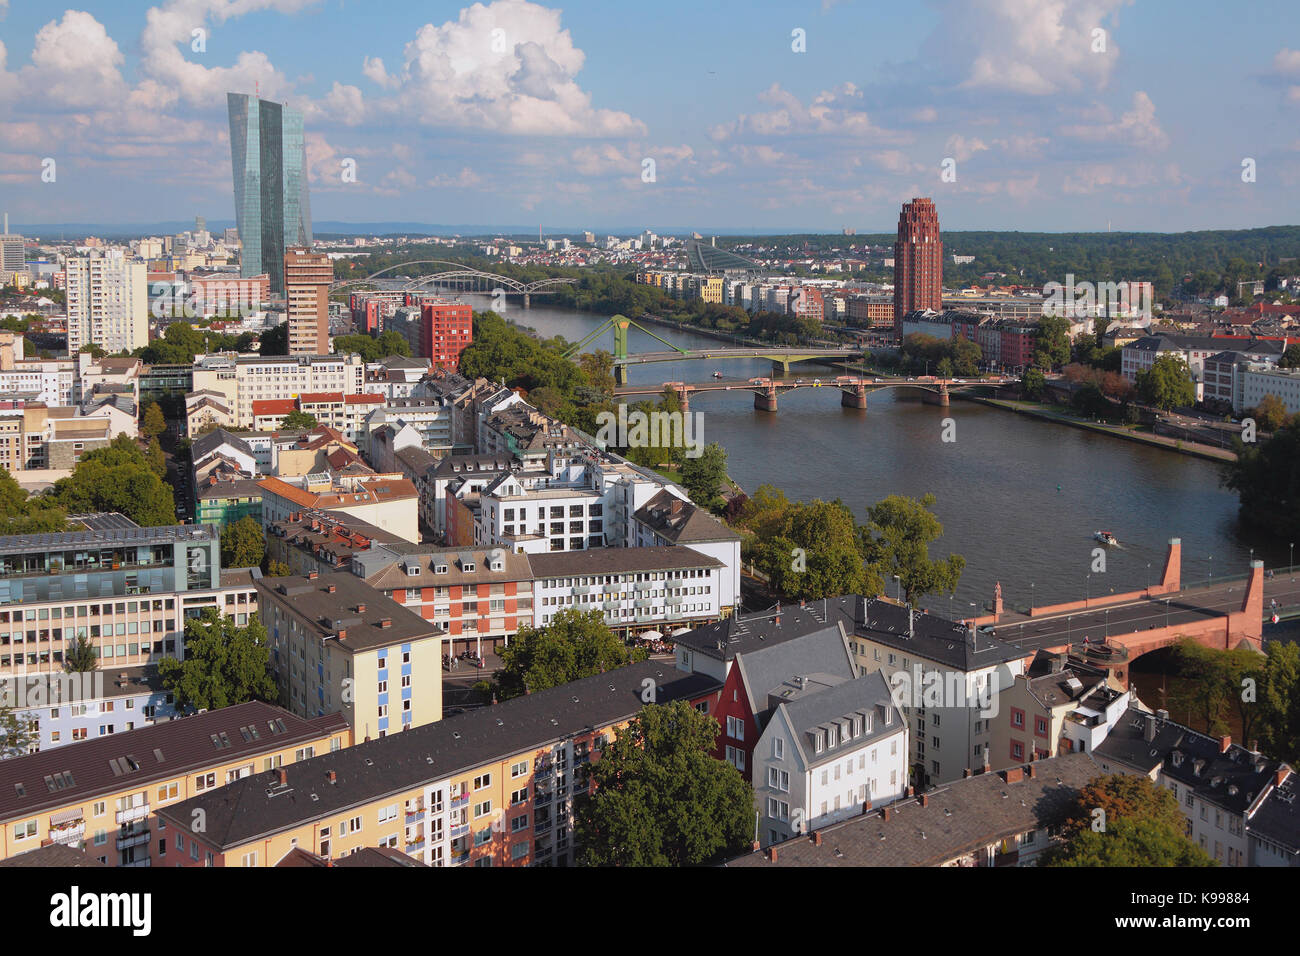 European city, river and bridges. Frankfurt am Main, Germany Stock Photo